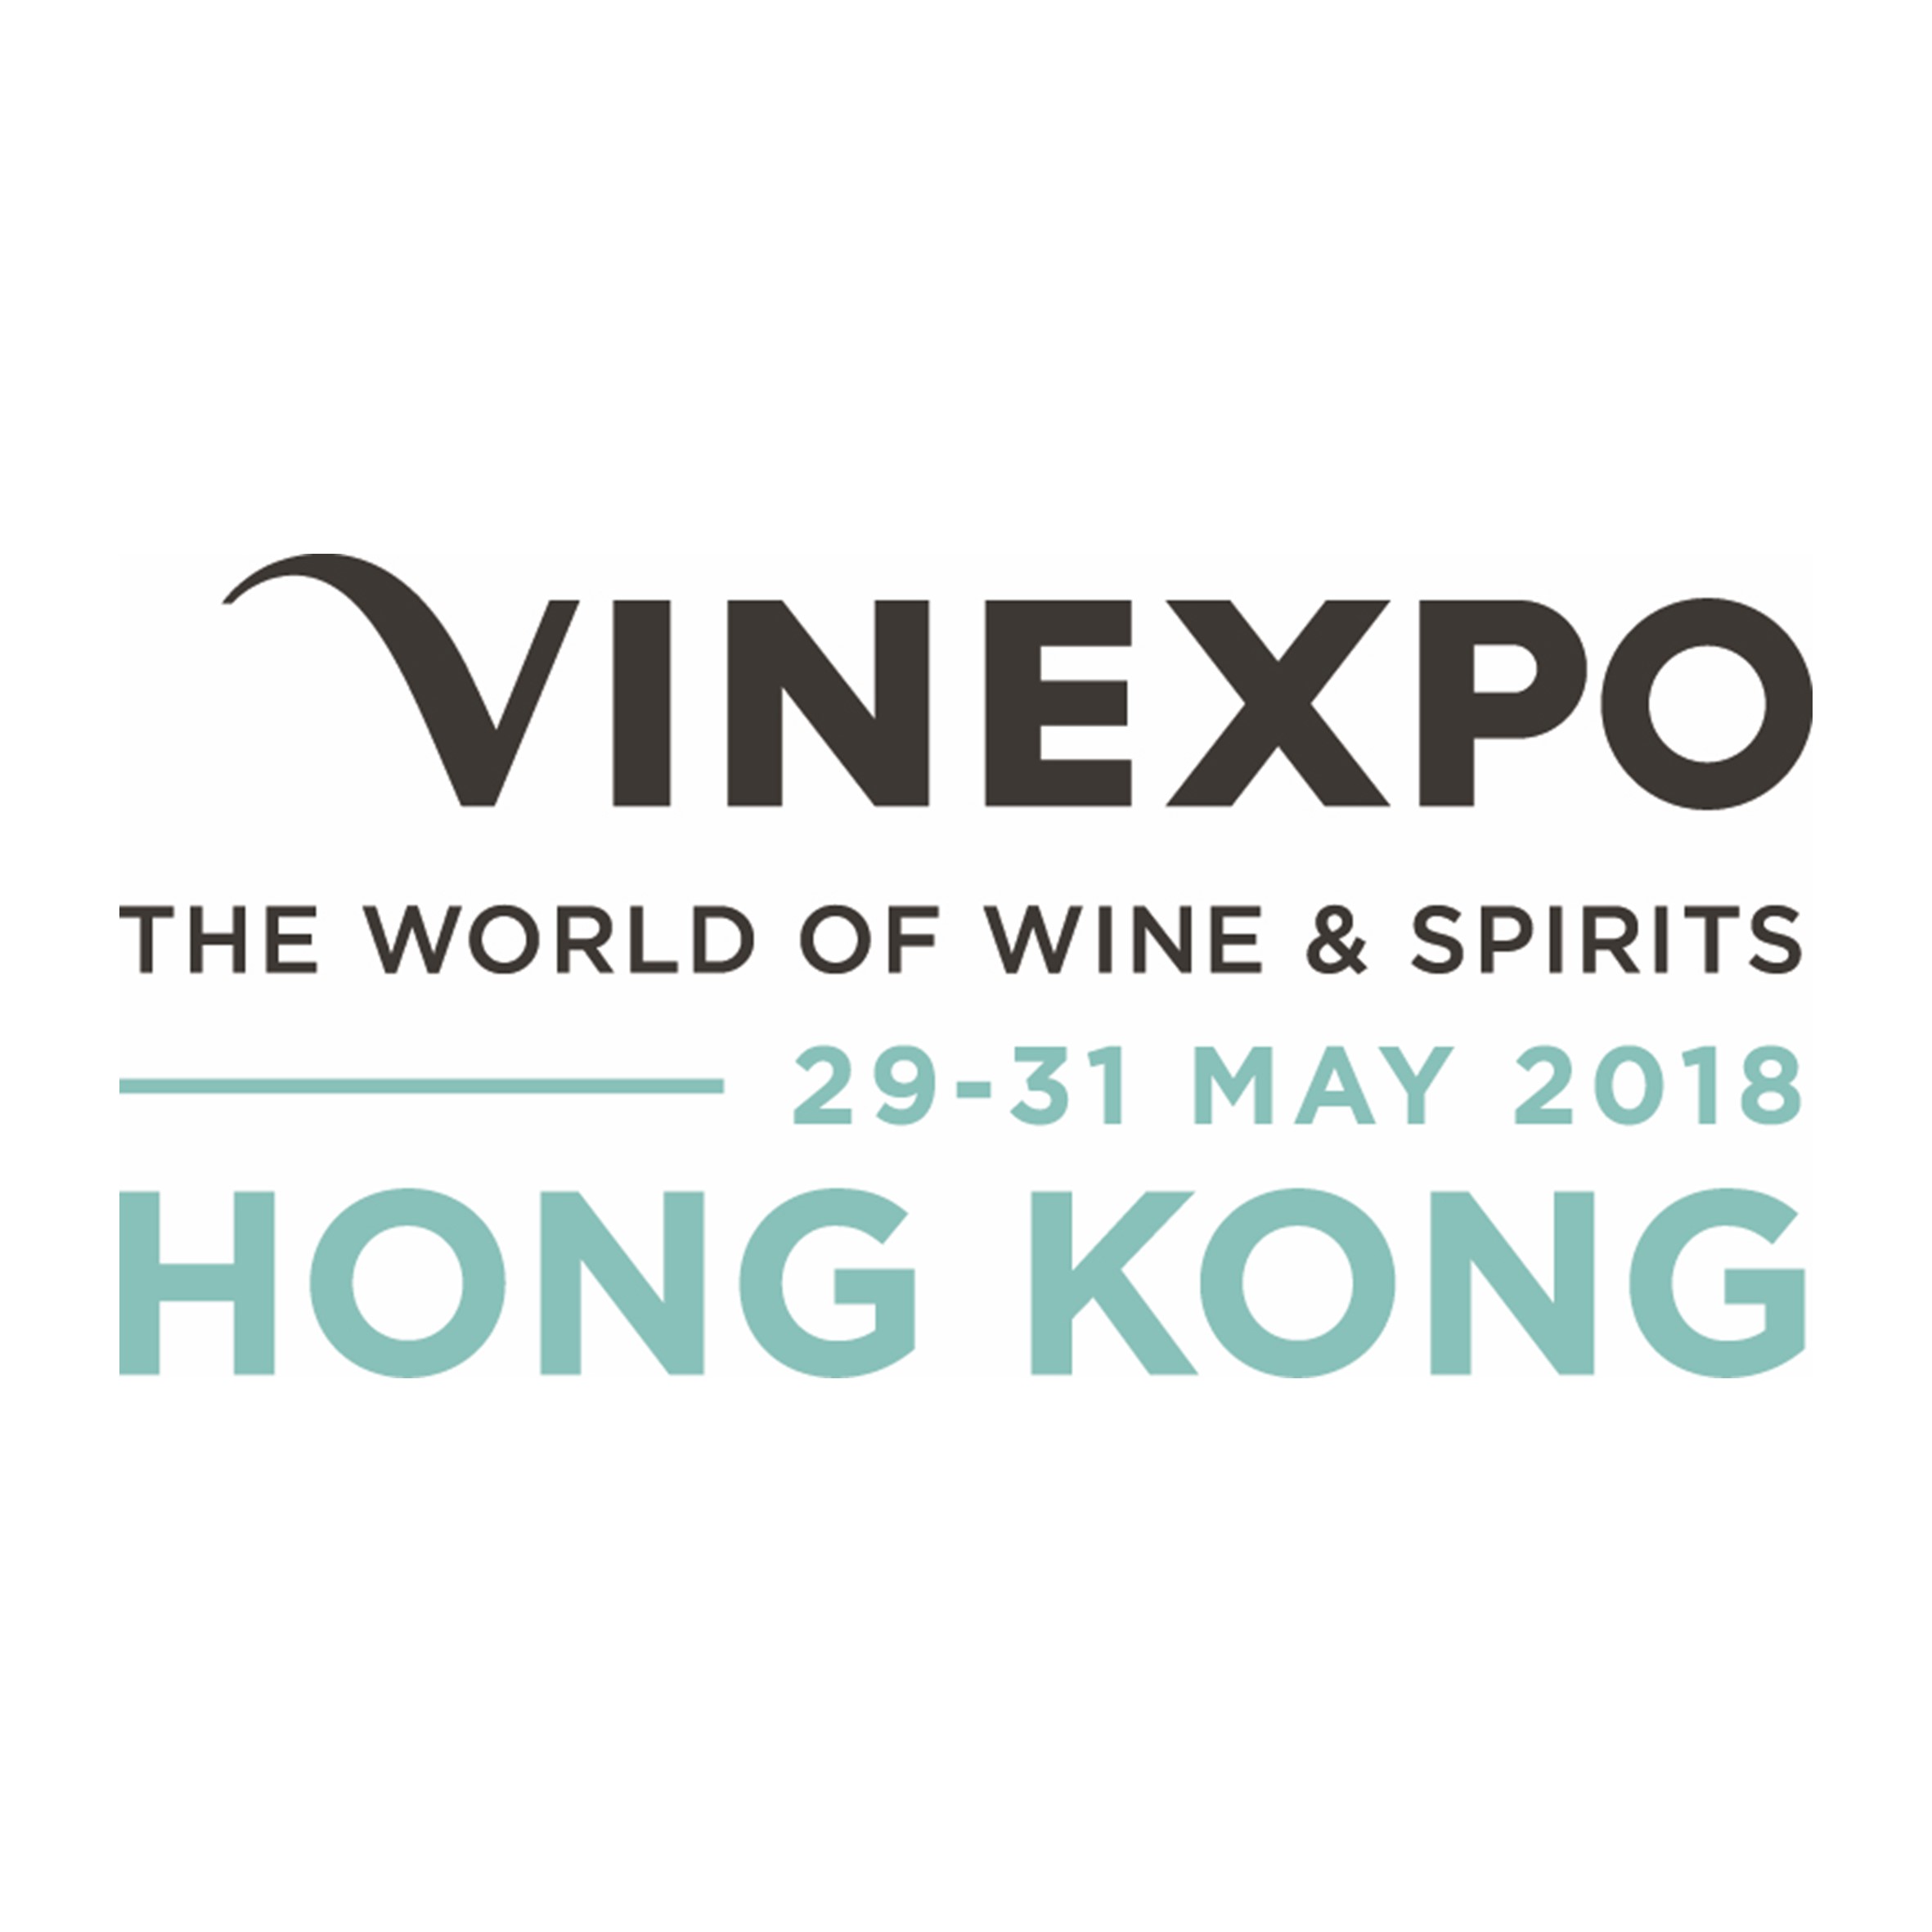 Vinexpo Hong Kong Logo 2018 - Driving future value in wine